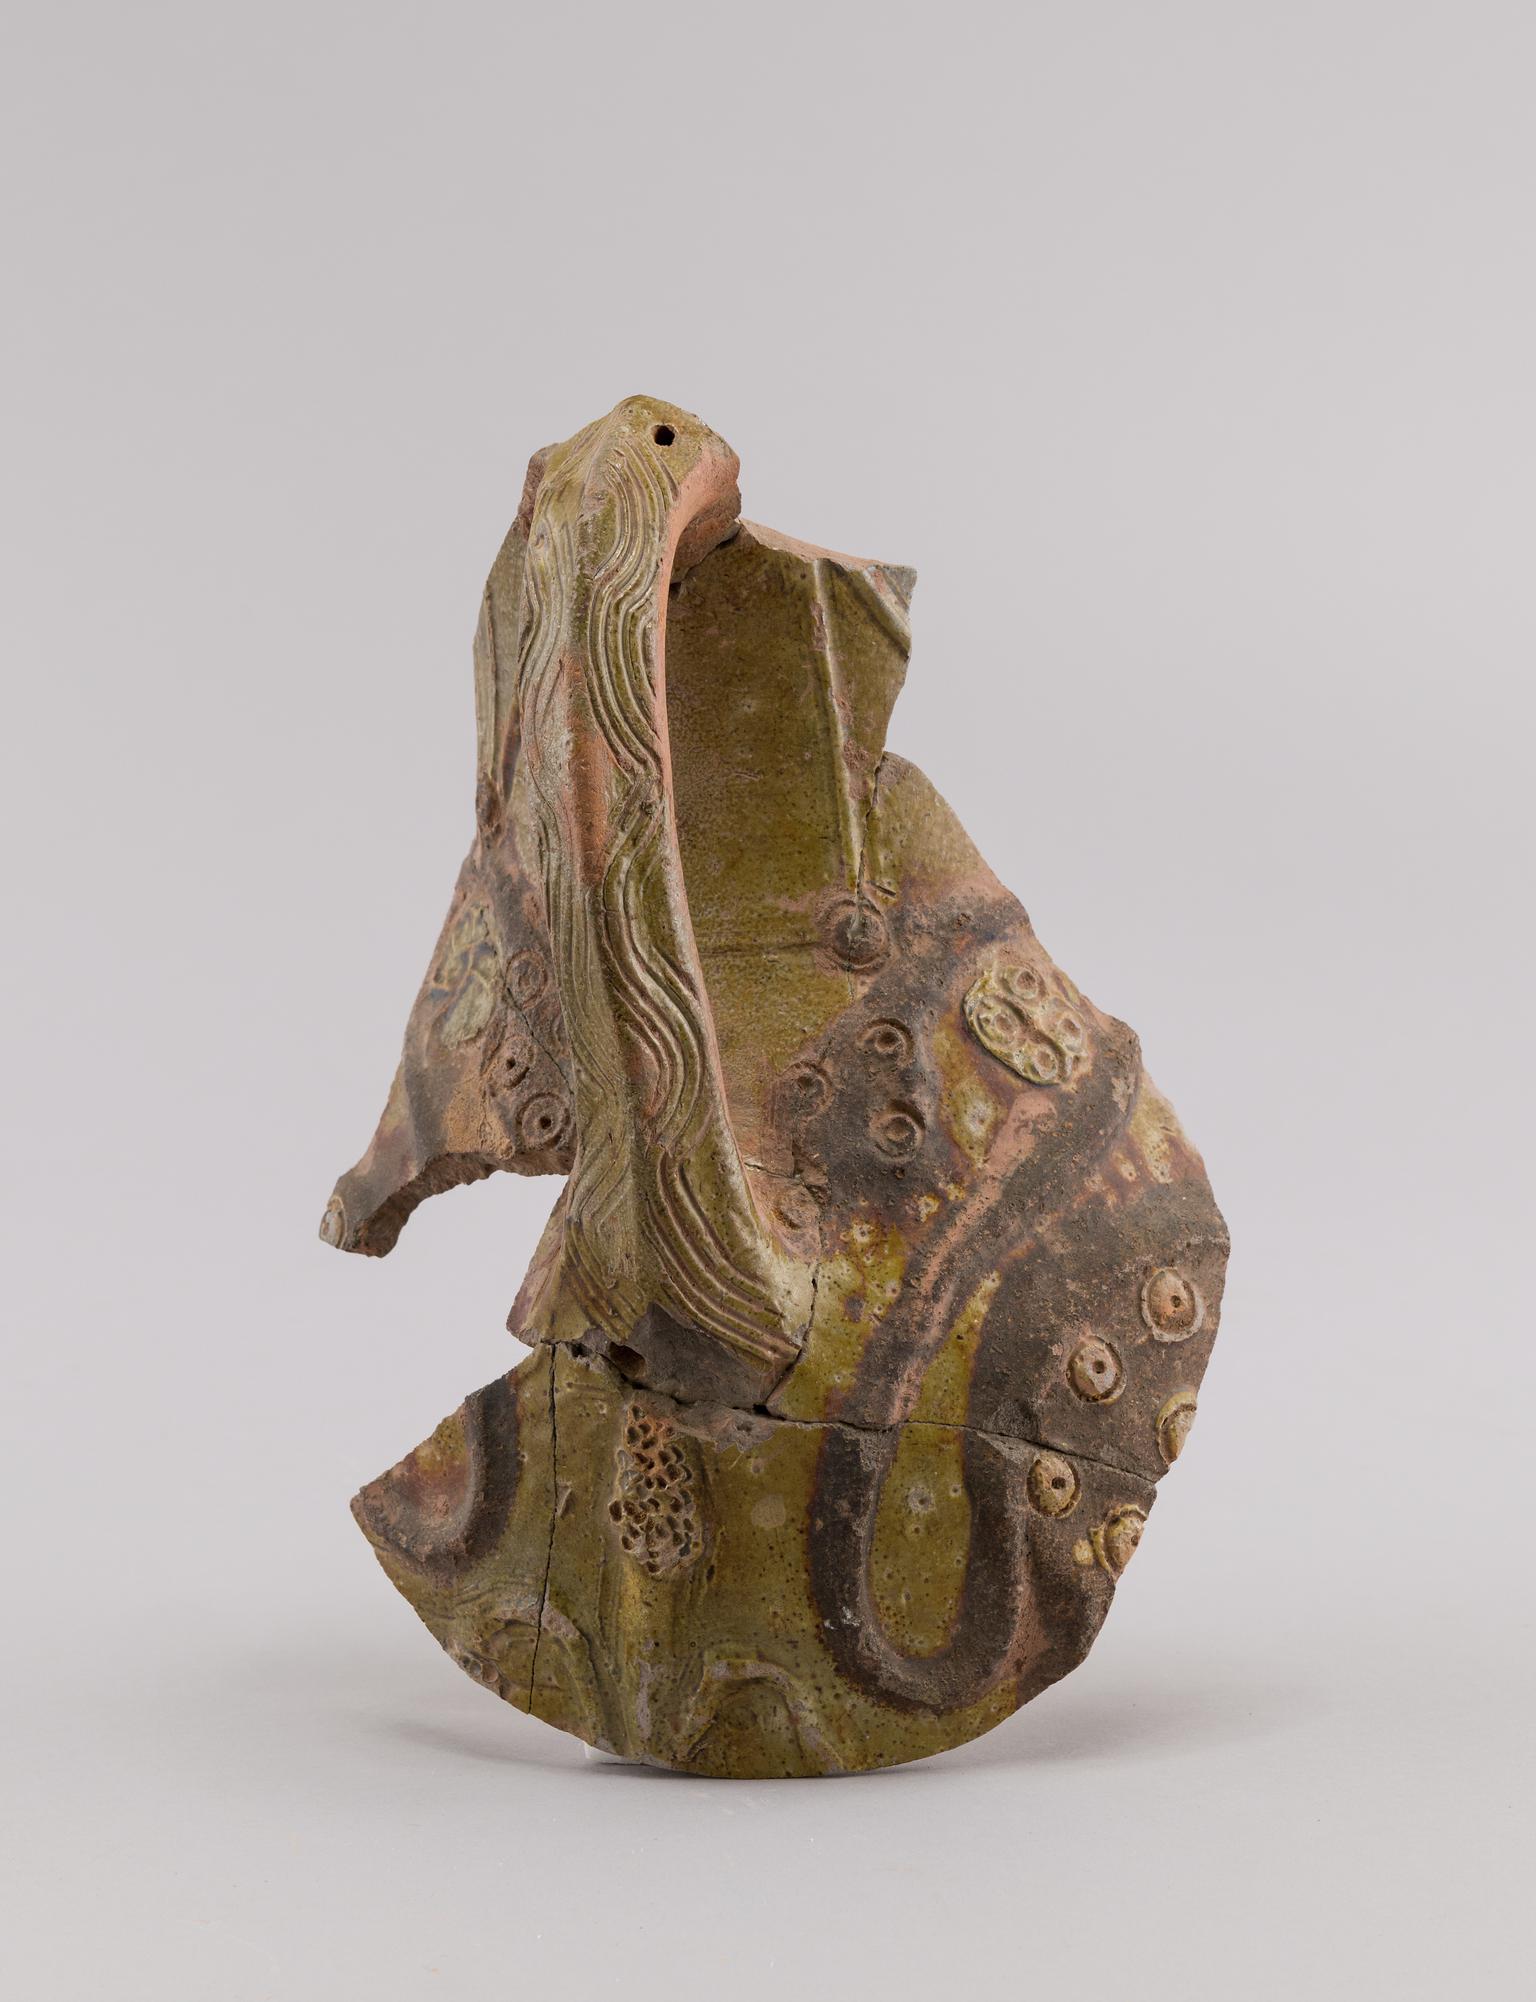 Medieval / Post-Medieval pottery jug